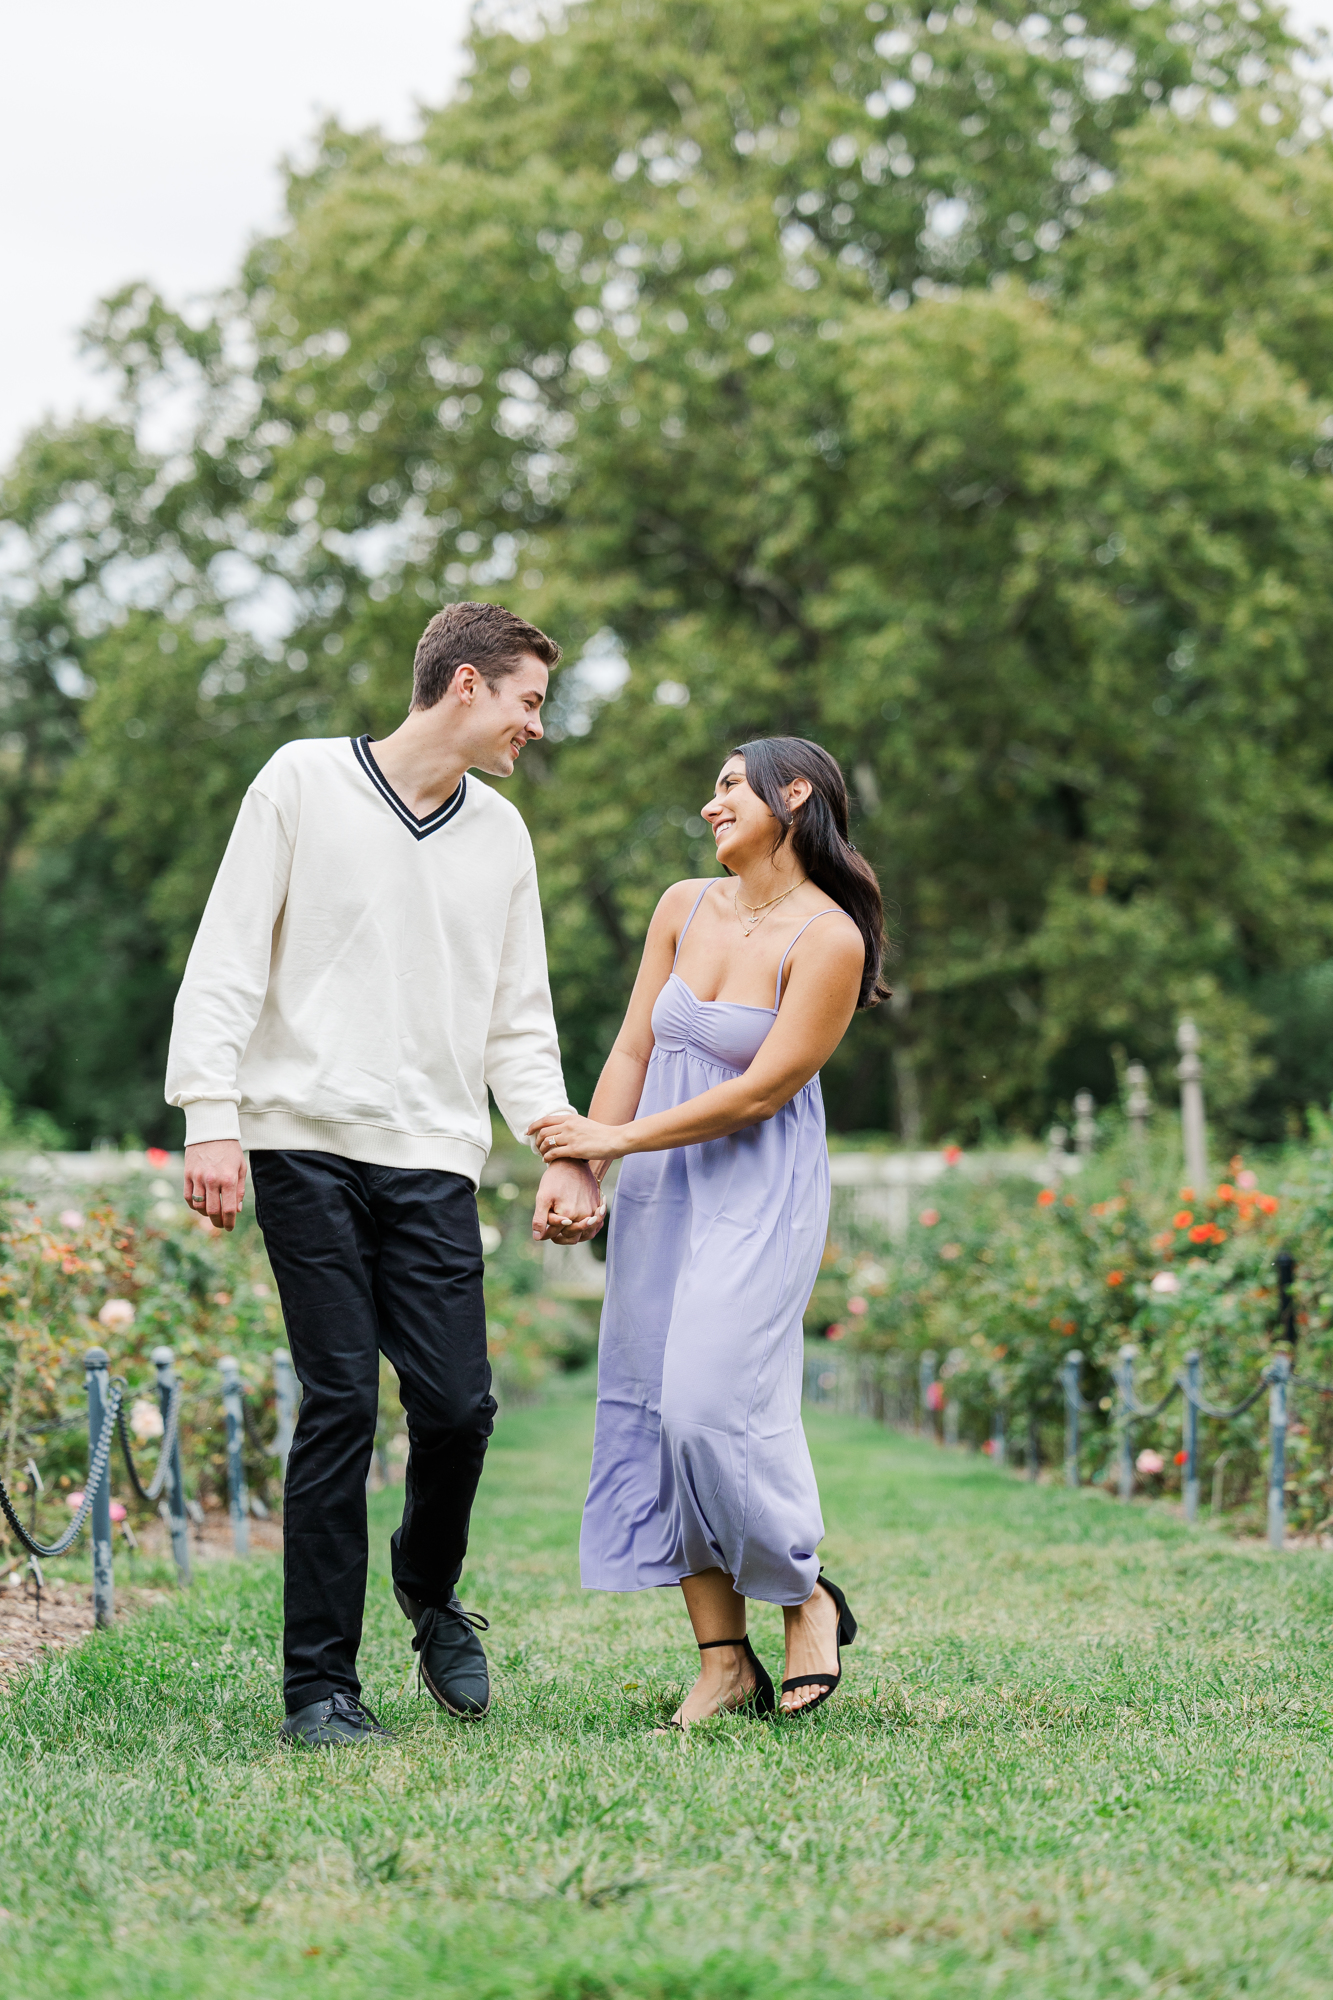 Amazing Proposal Photos in the Rose Garden at Brooklyn Botanic Garden